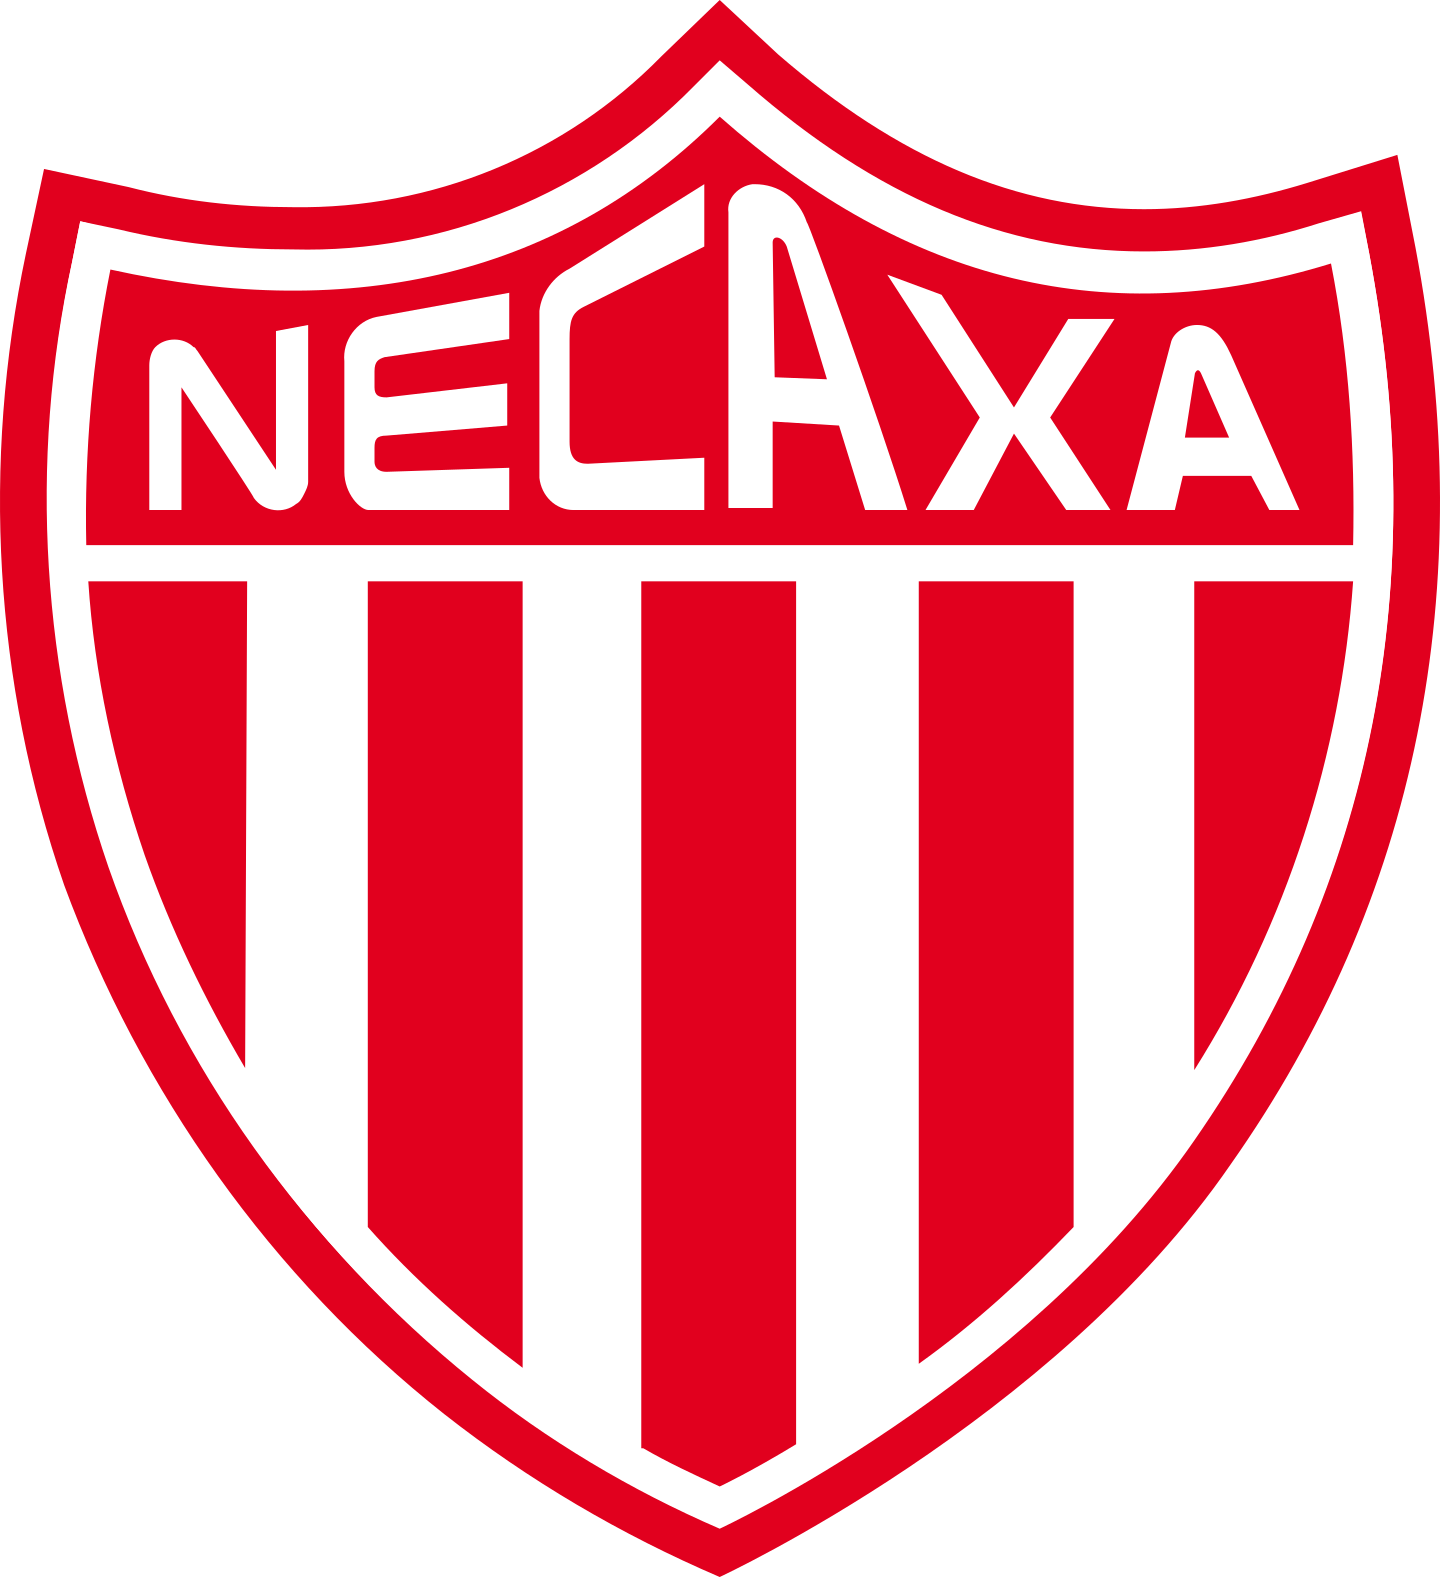 club necaxa logo 2 - Club Necaxa Logo